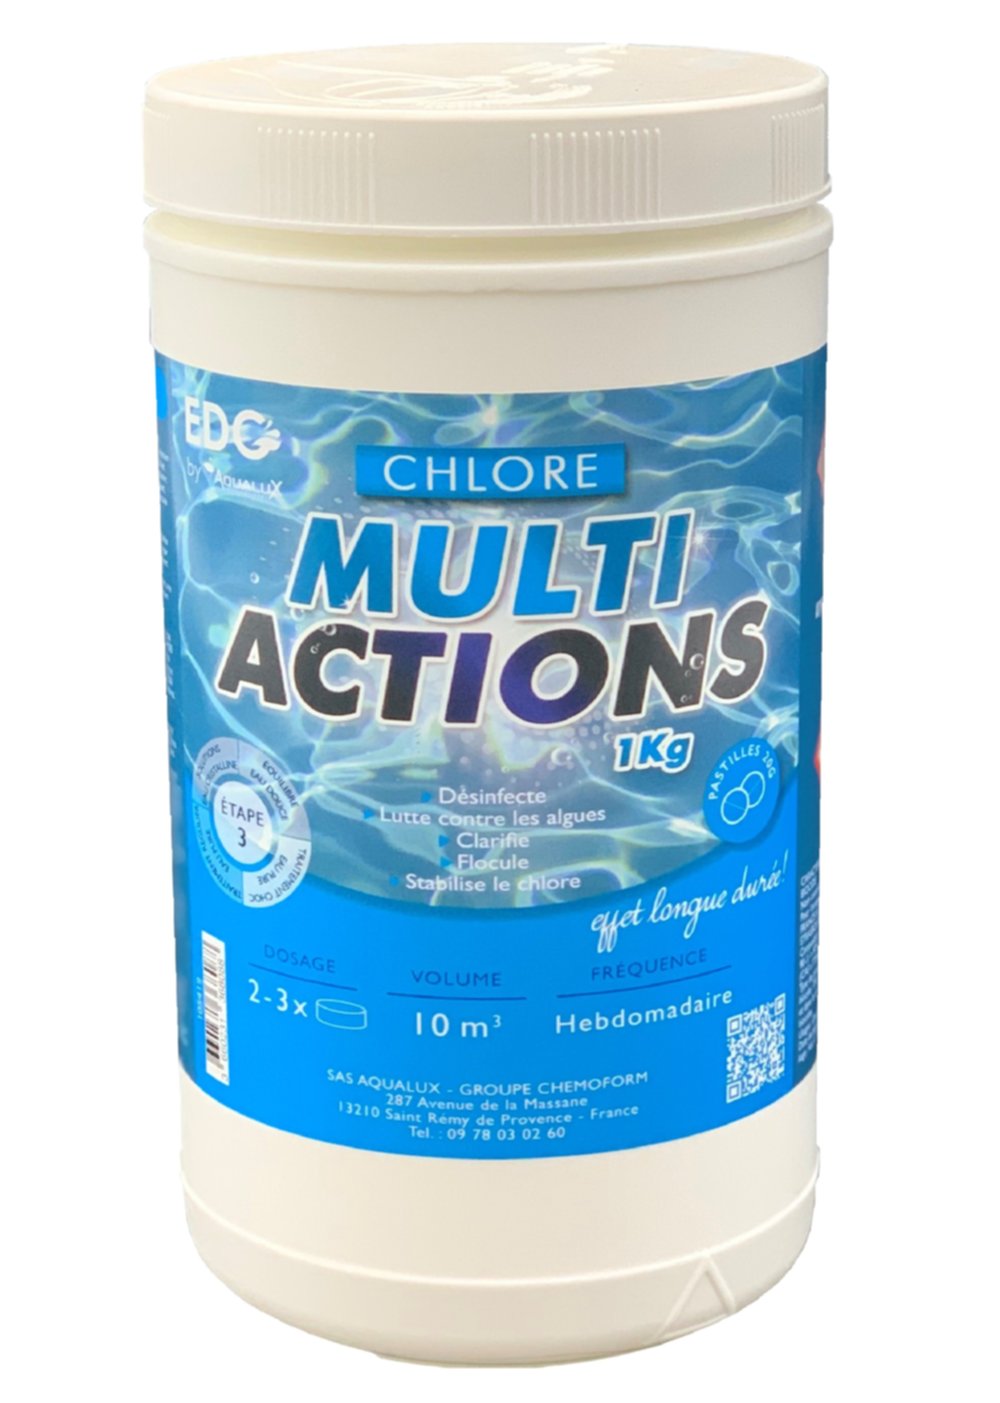 Pastilles chlore multi-actions 20g 1 kg - EDG by AQUALUX